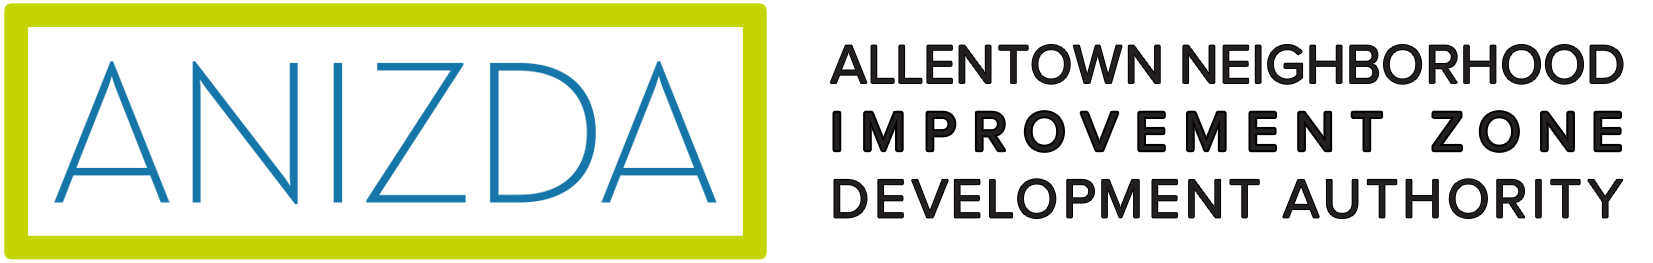 Allentown Neighborhood Improvement Zone Development Authority